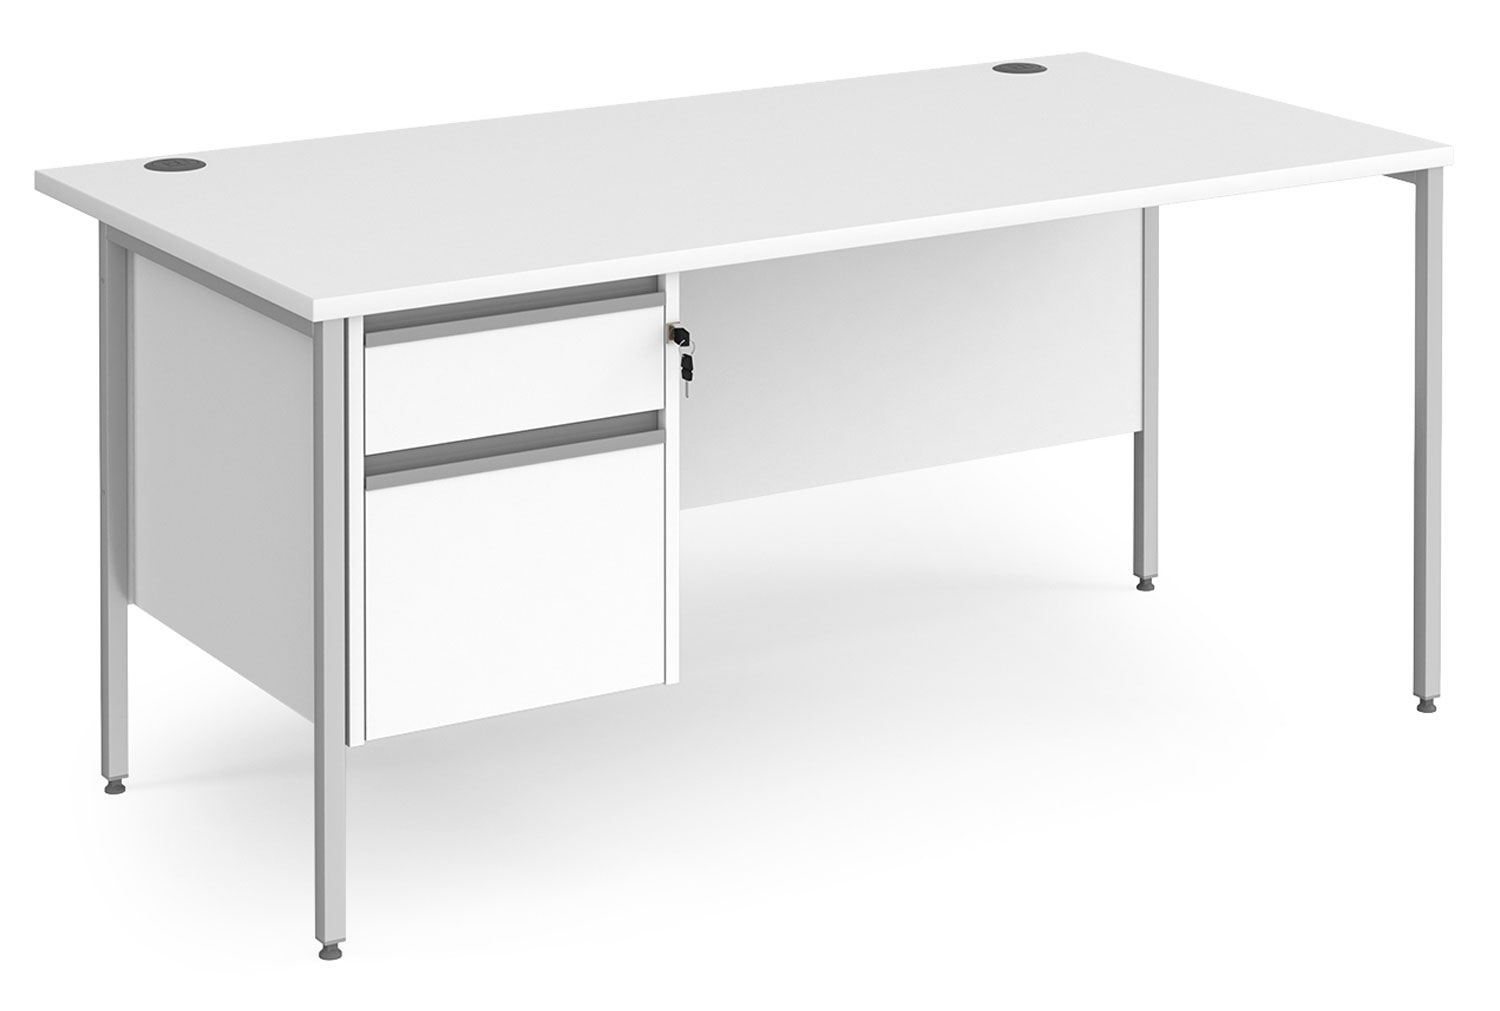 Value Line Classic+ Rectangular H-Leg Office Desk 2 Drawers (Silver Leg), 160wx80dx73h (cm), White